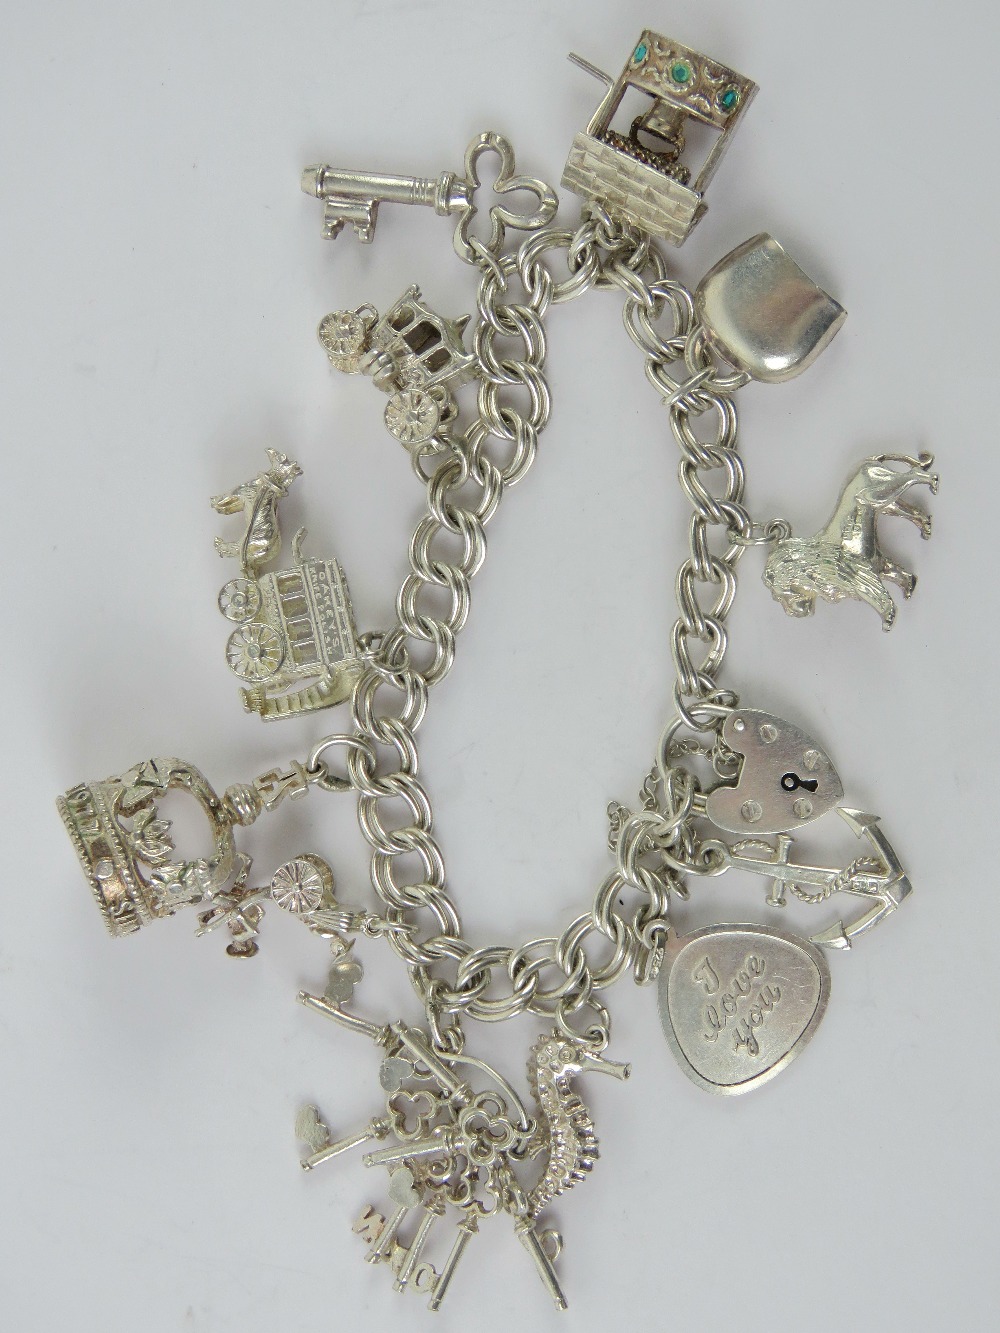 An HM silver double link charm bracelet